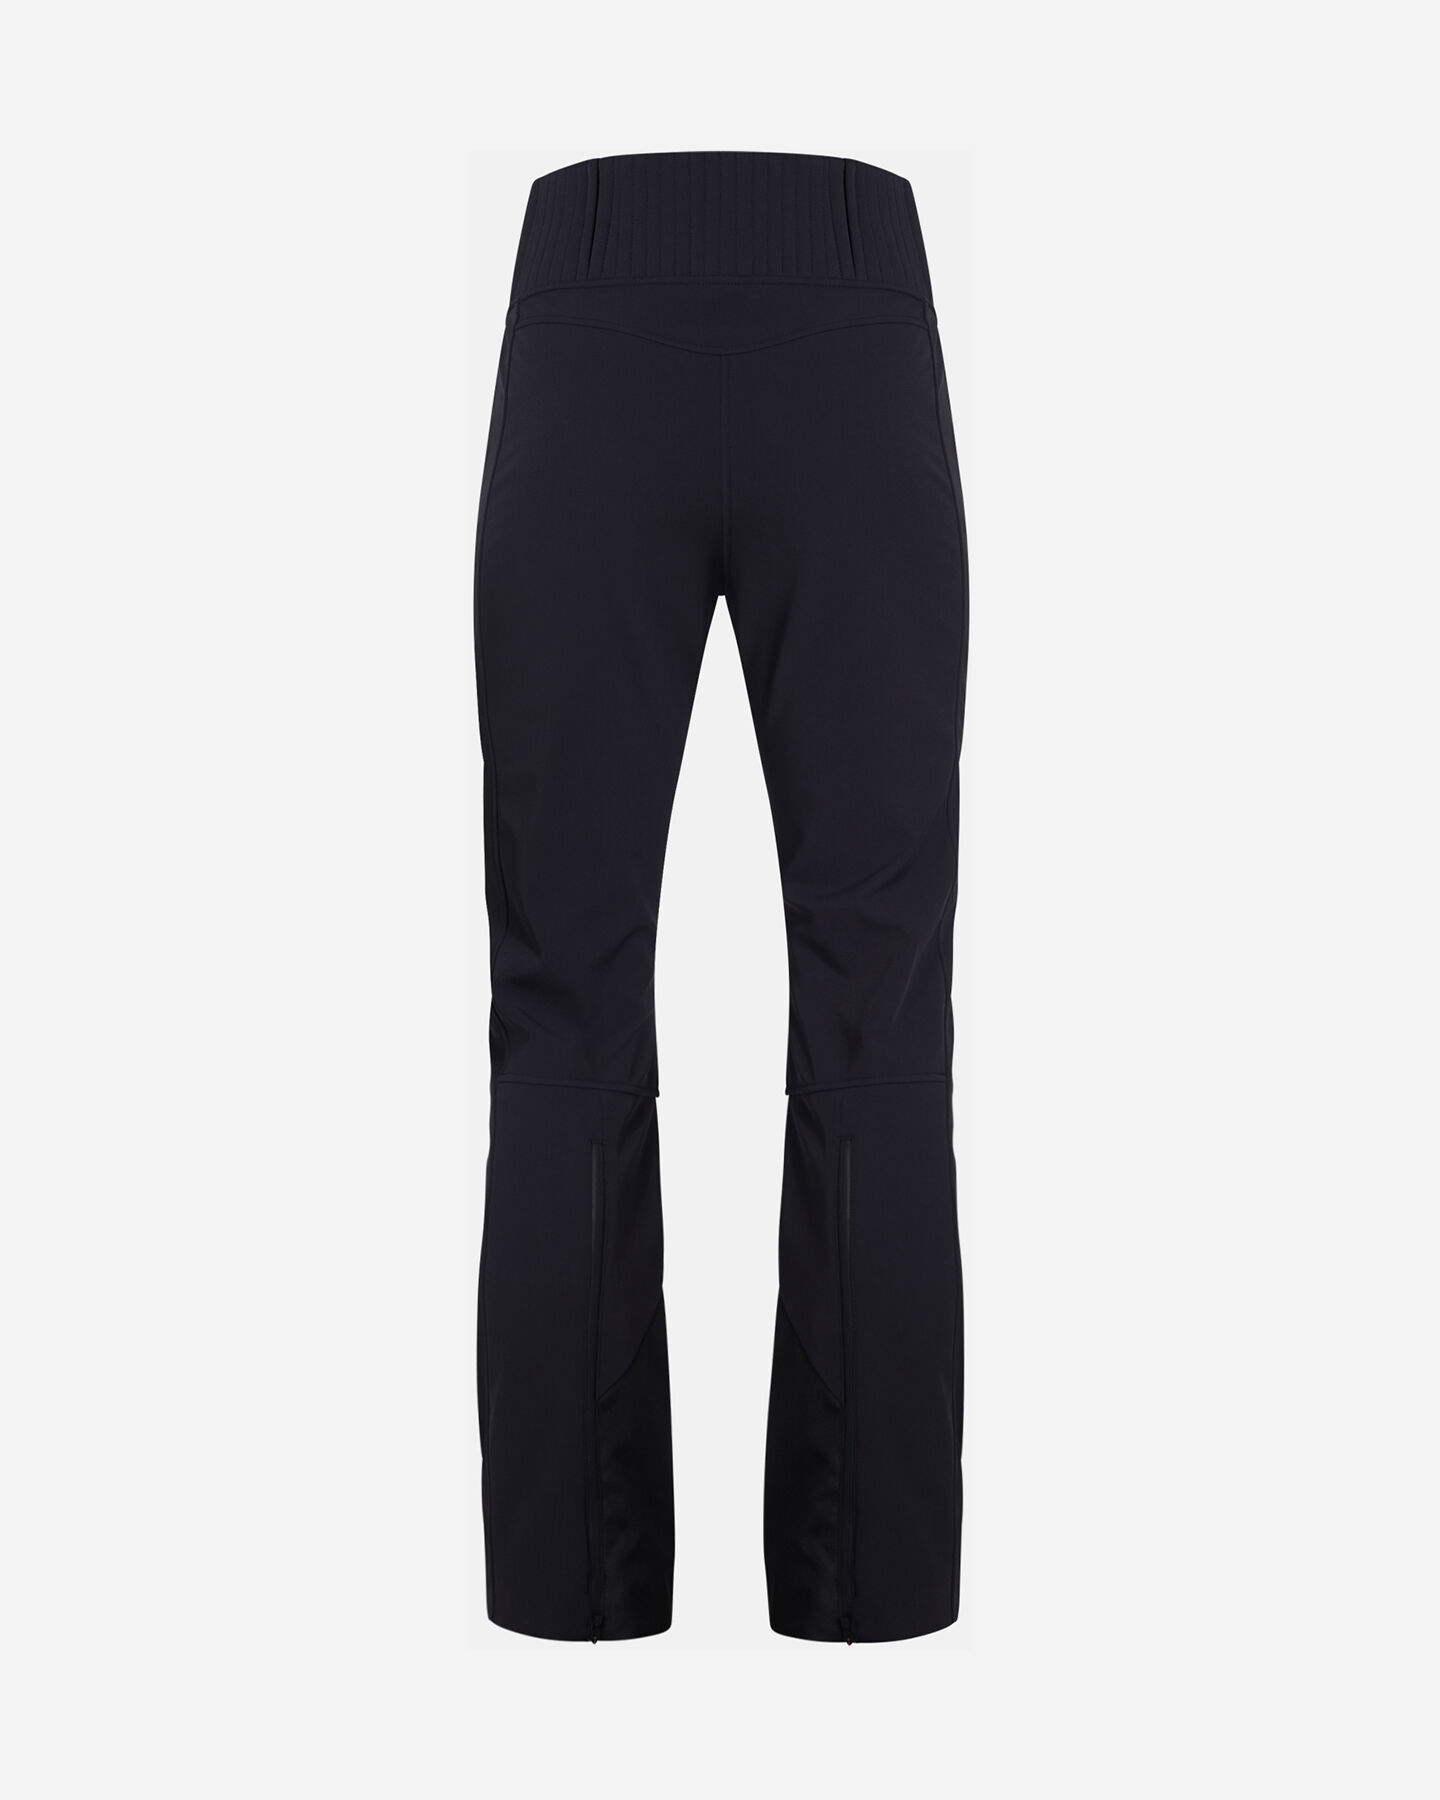  Pantalone sci PEAK PERFORMANCE HIGH STRETCH W S4099104|1|S scatto 2